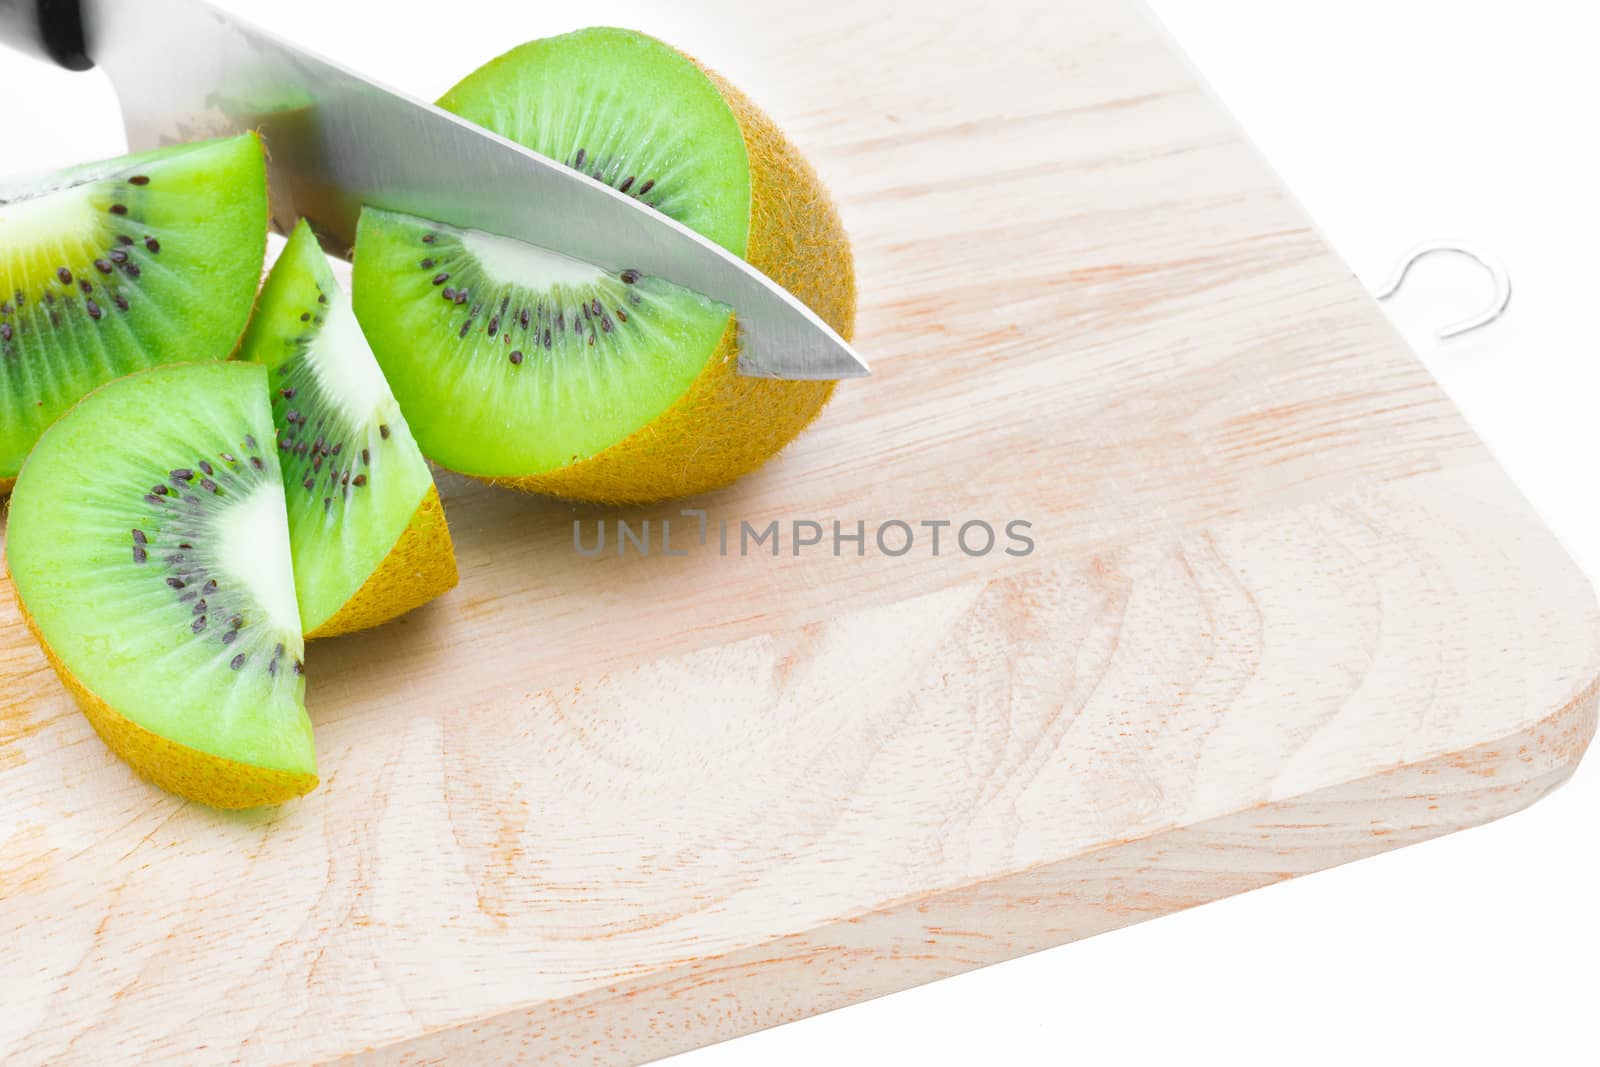 A knife kiwi fruit on a white background